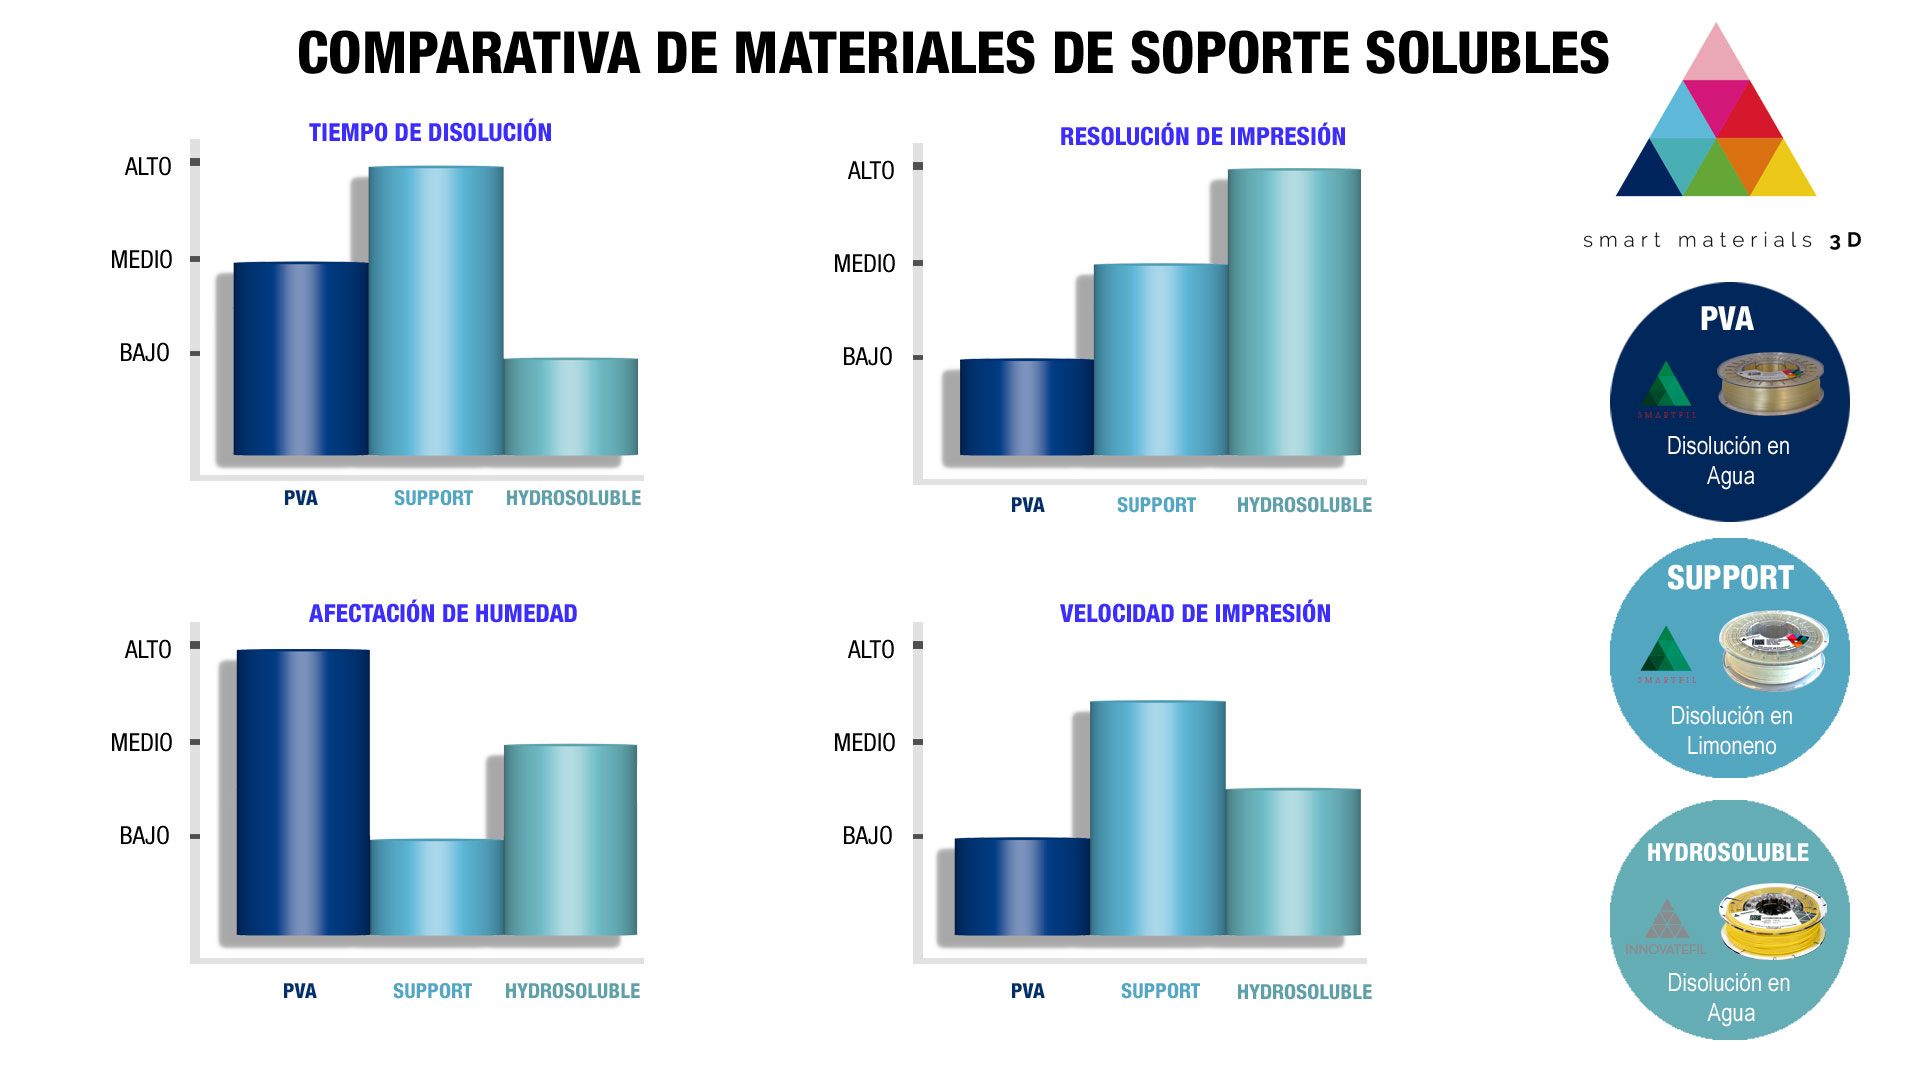 Comparativa de materiales de soporte solubles